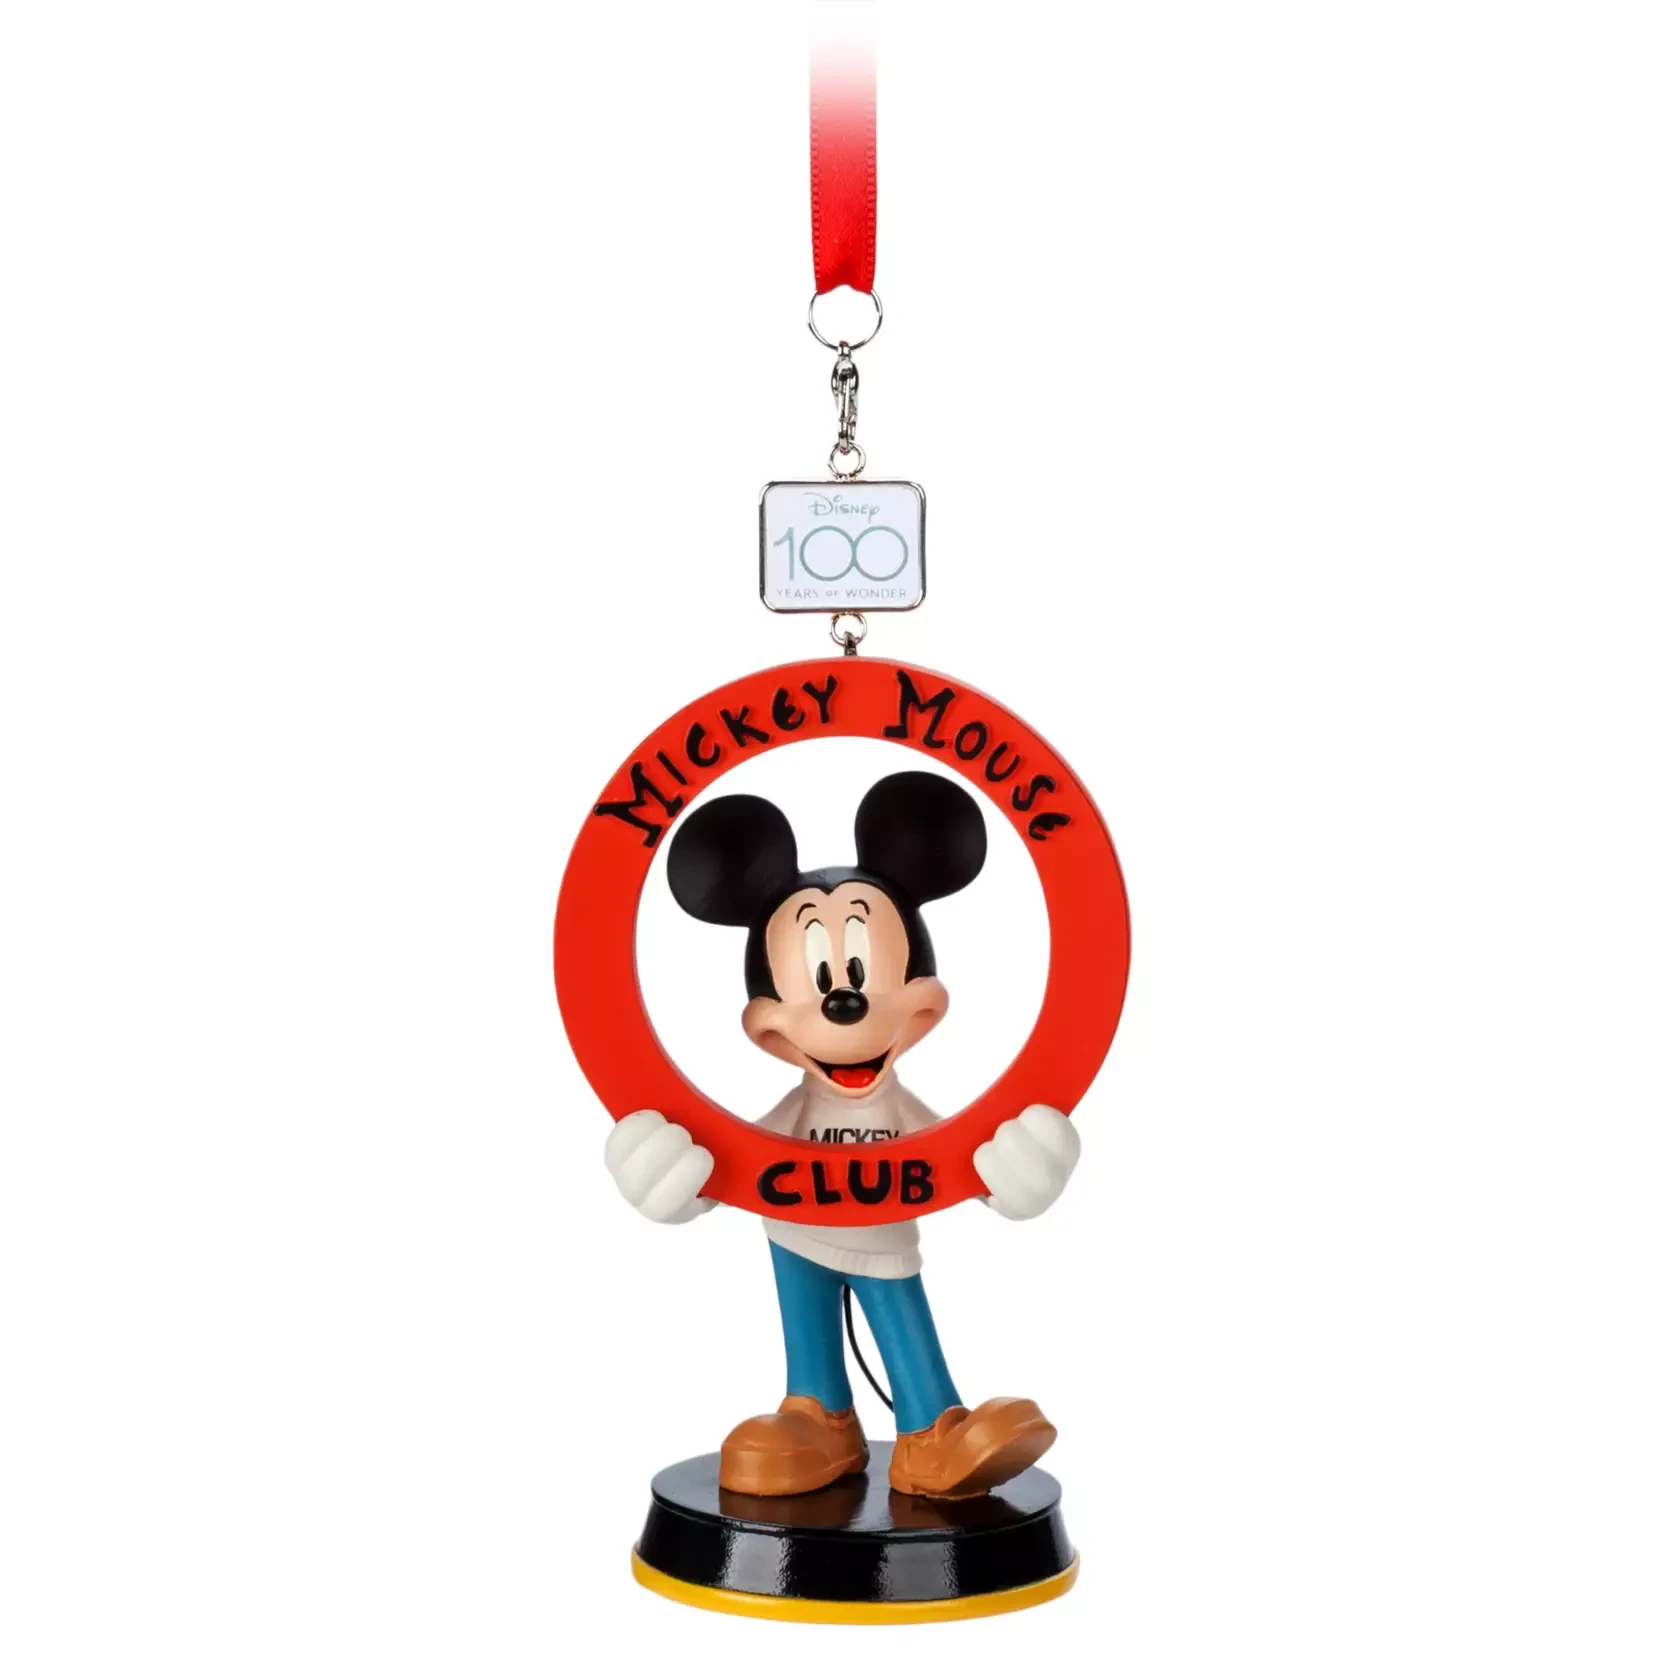 item Mickey Mouse Club - Disney100 - Ornament 6506048307360fmtwebpqlt70wid1680h